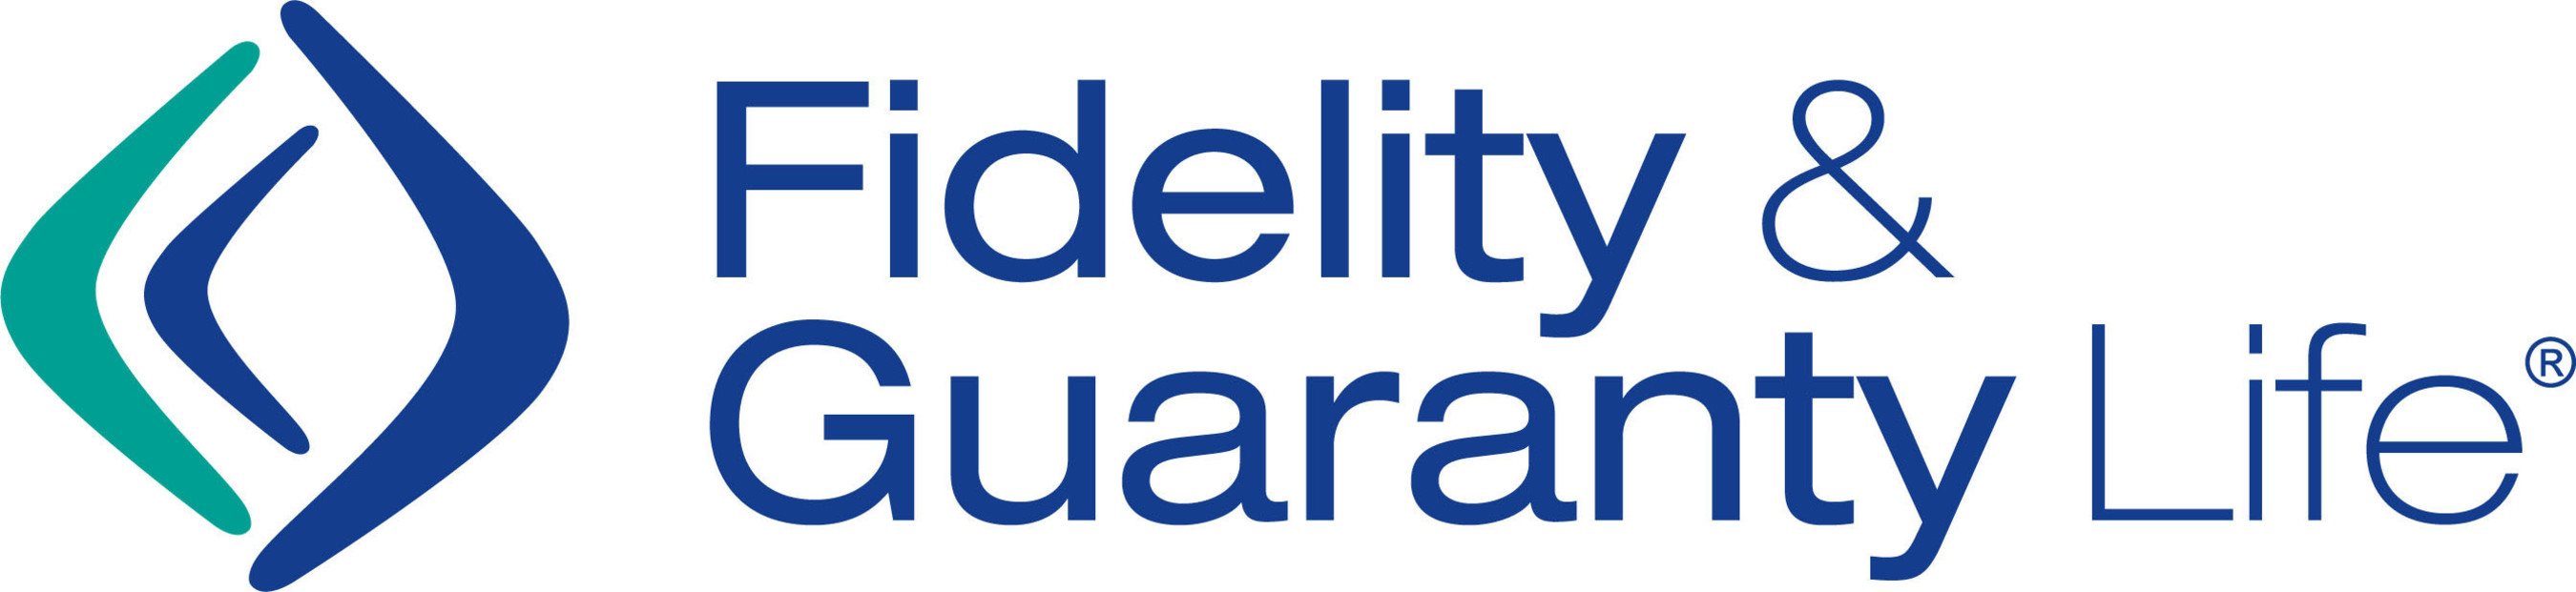 Fidelity & Guaranty Life Logo